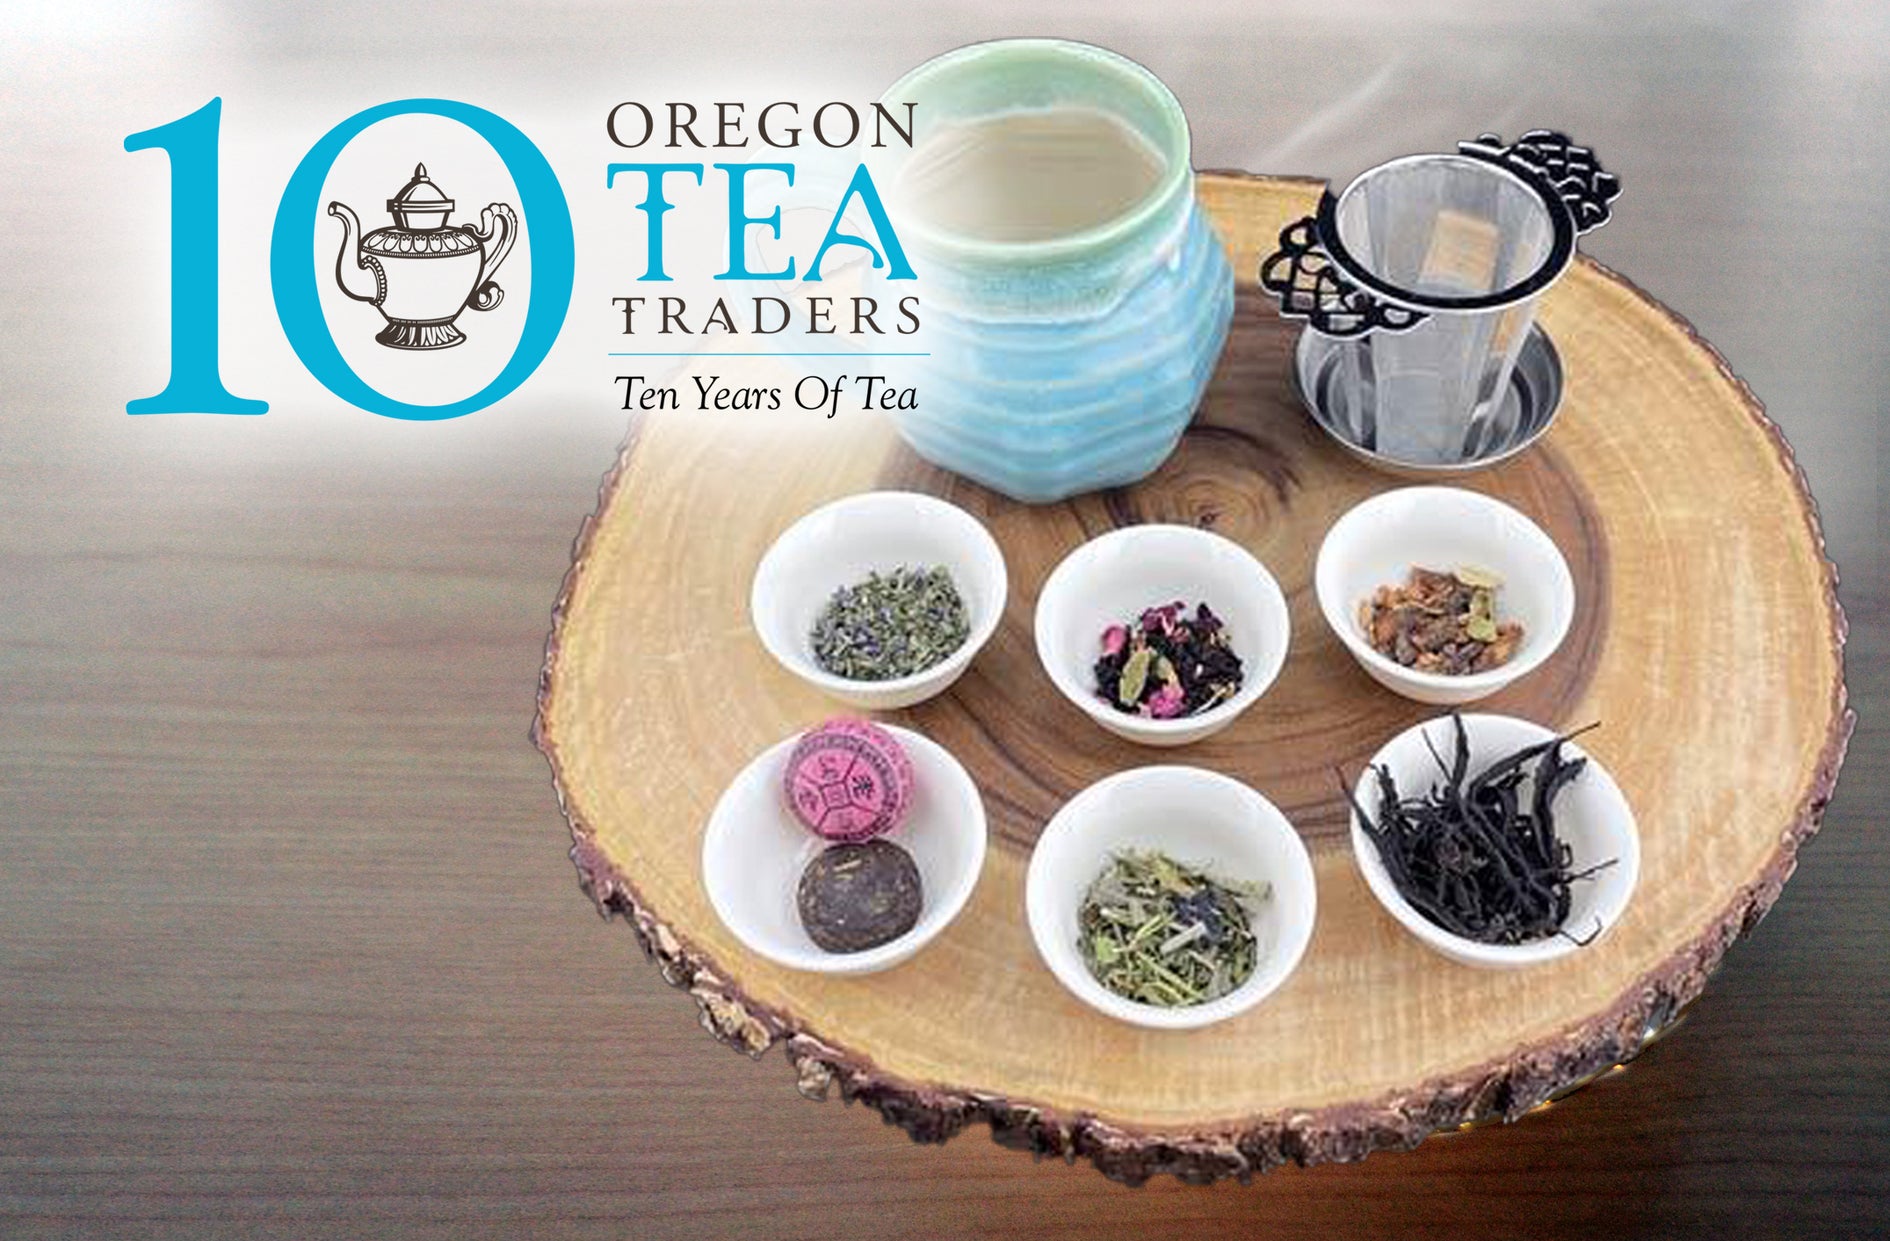 Oregon Tea Traders 10 Year Anniversary Pack